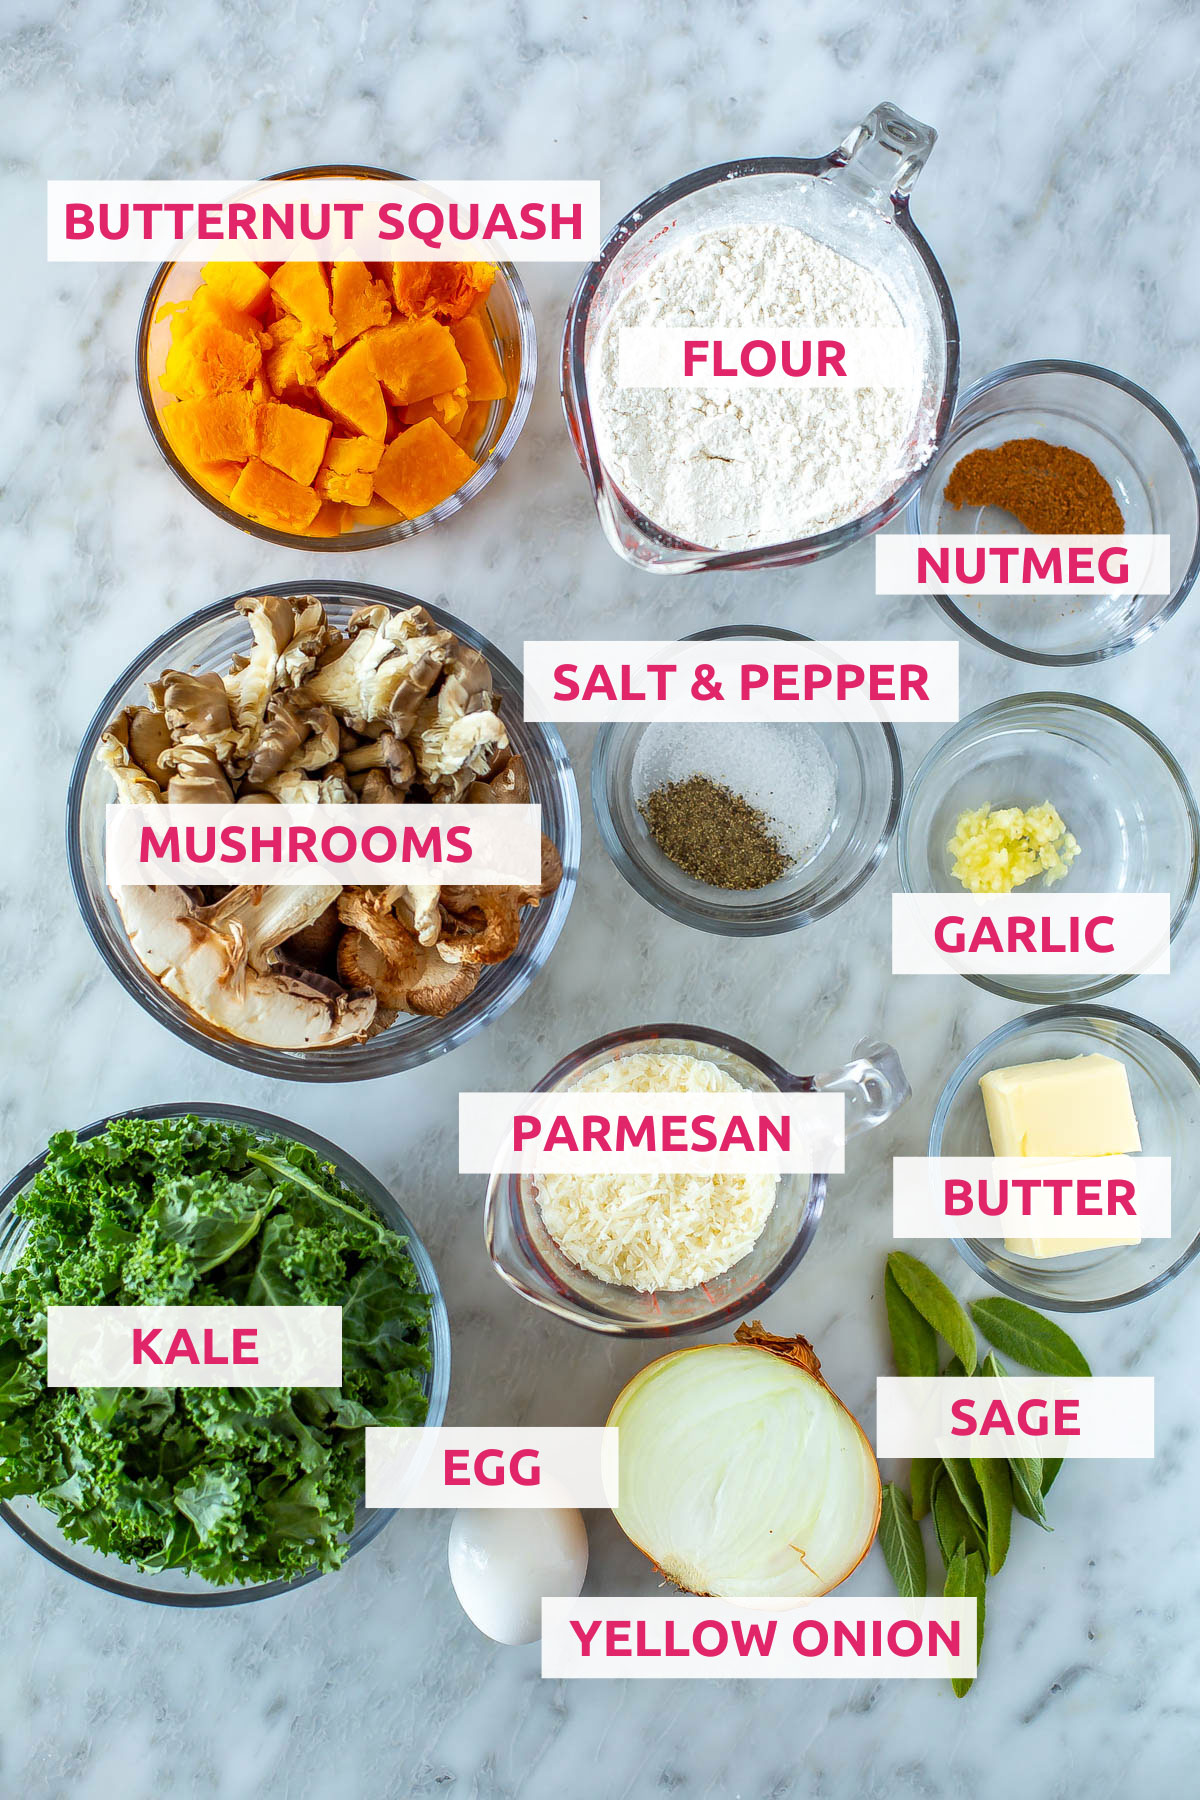 Ingredients for butternut squash gnocchi: butternut squash, flour, nutmeg, mushrooms, salt, pepper, garlic, parmesan, kale, egg, yellow onion, butter and sage.